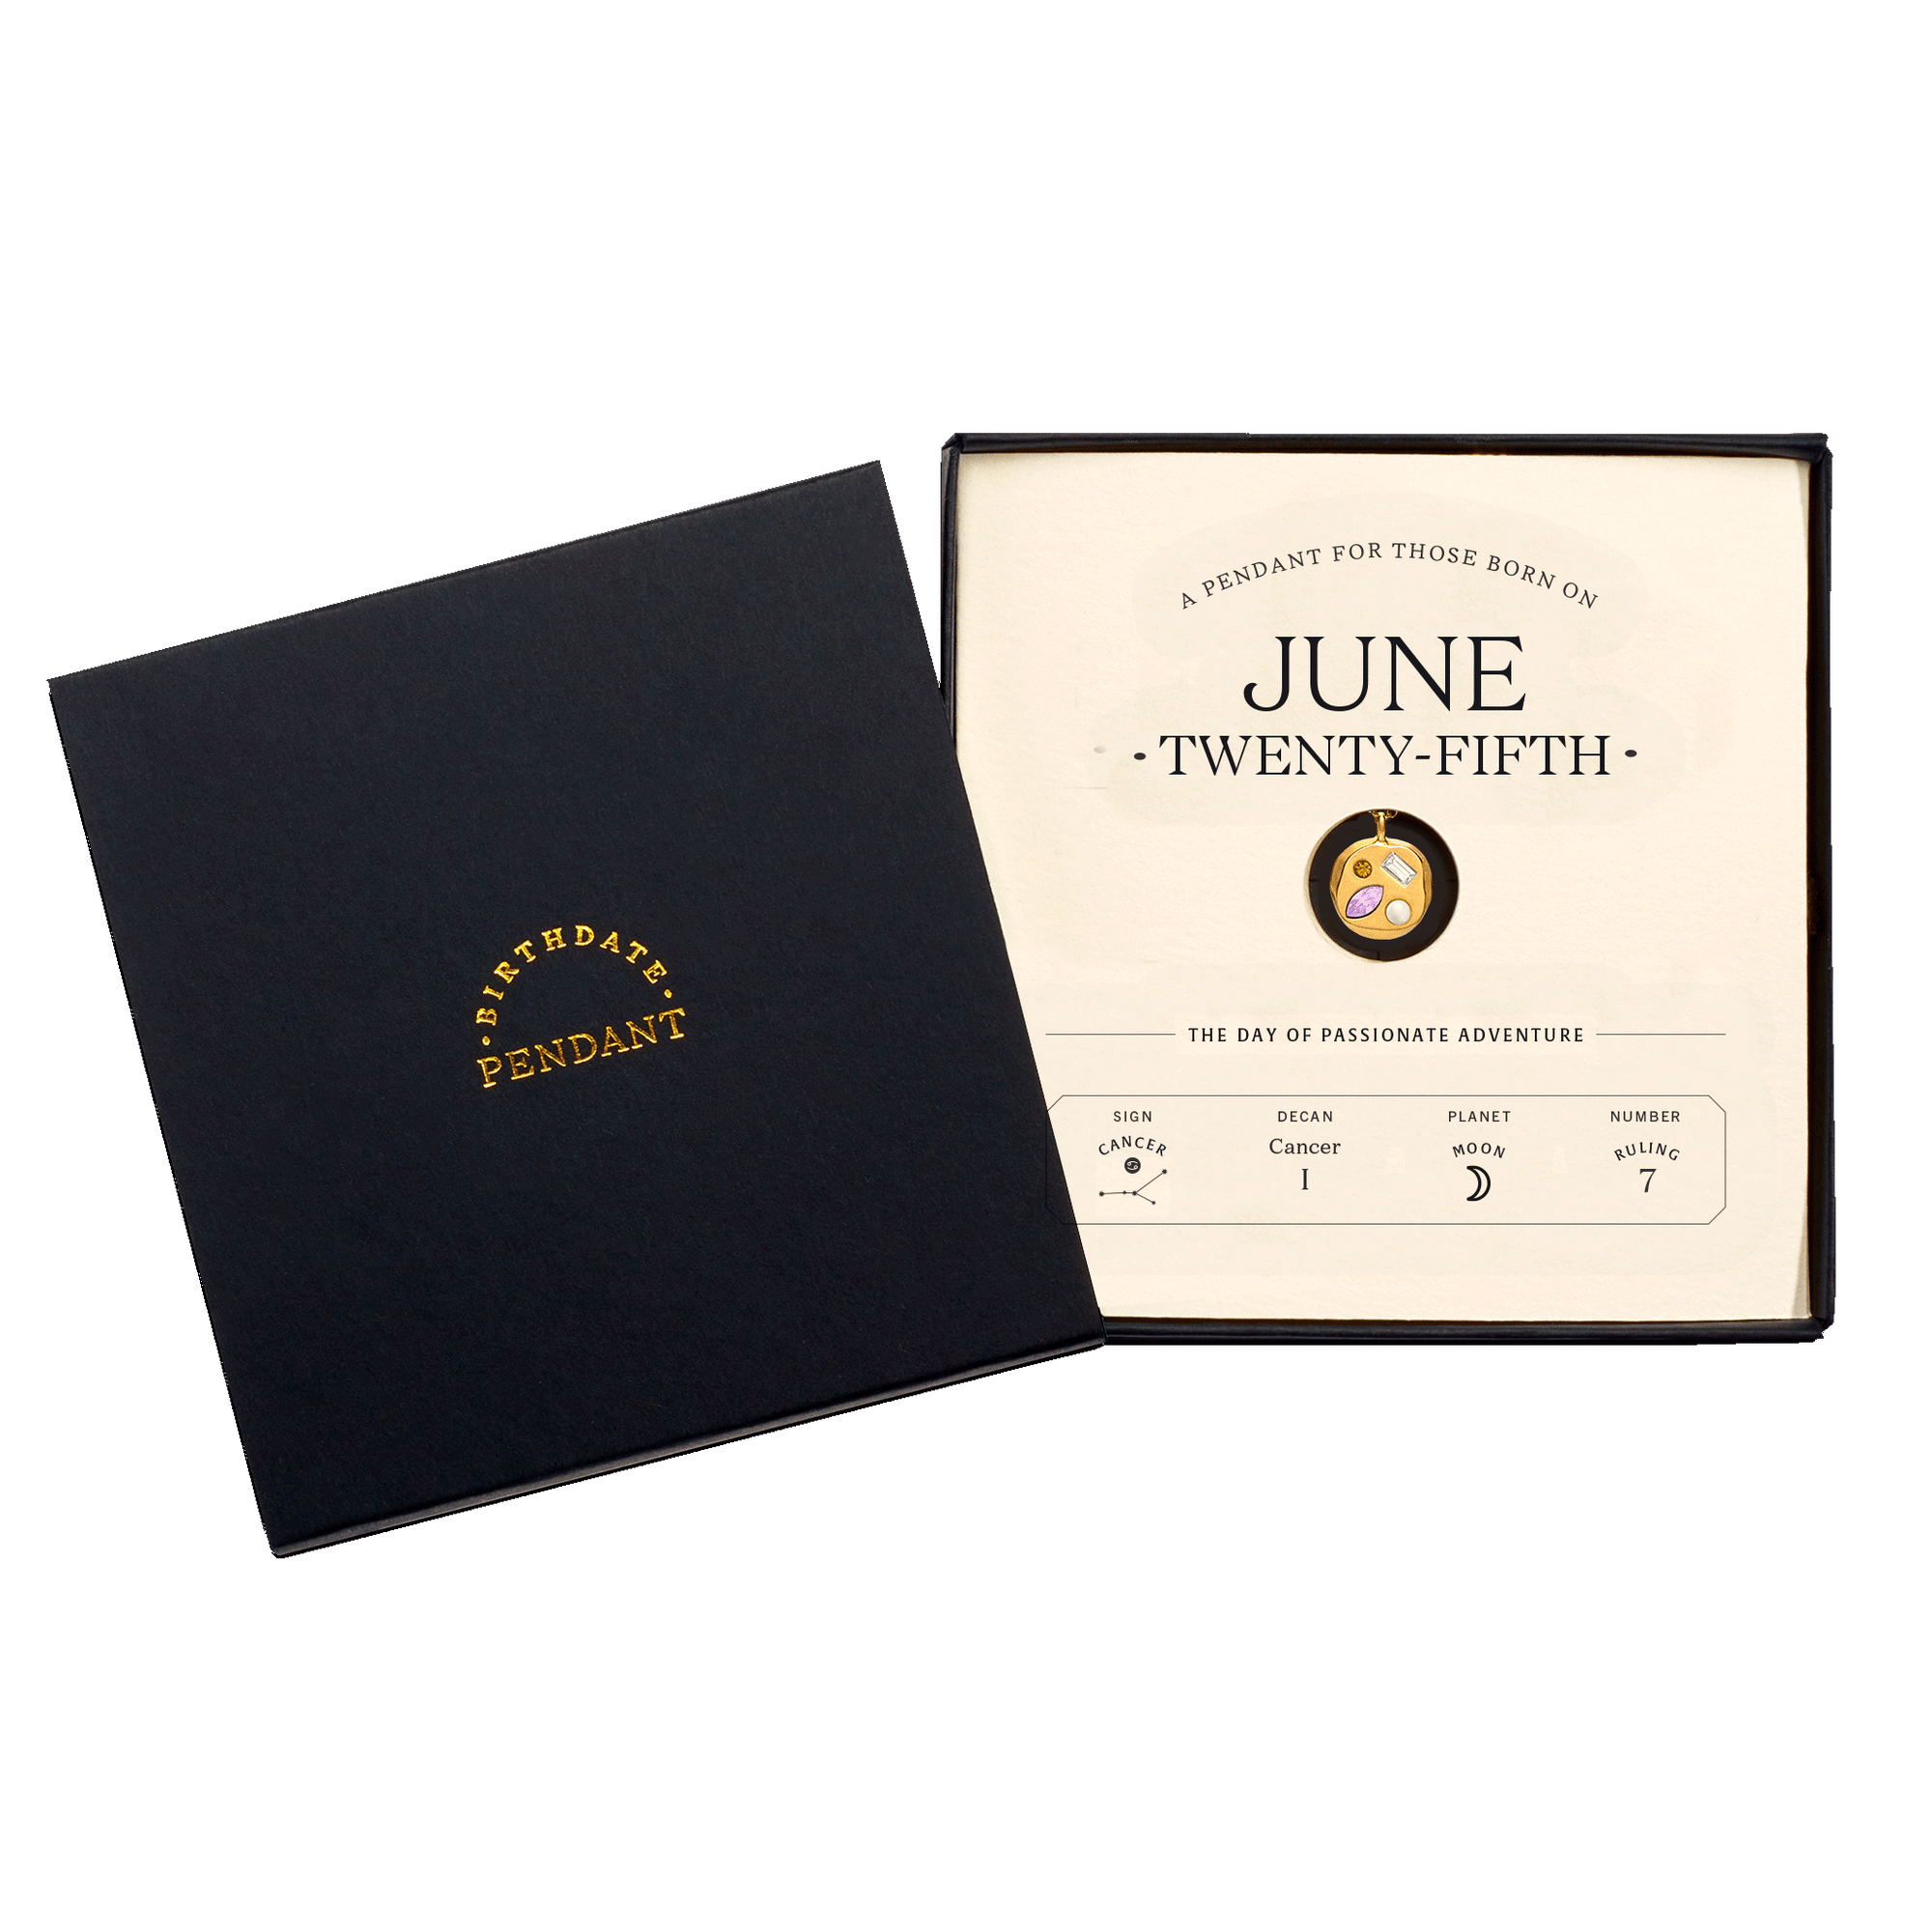 The June Twenty-Fifth Pendant inside its box